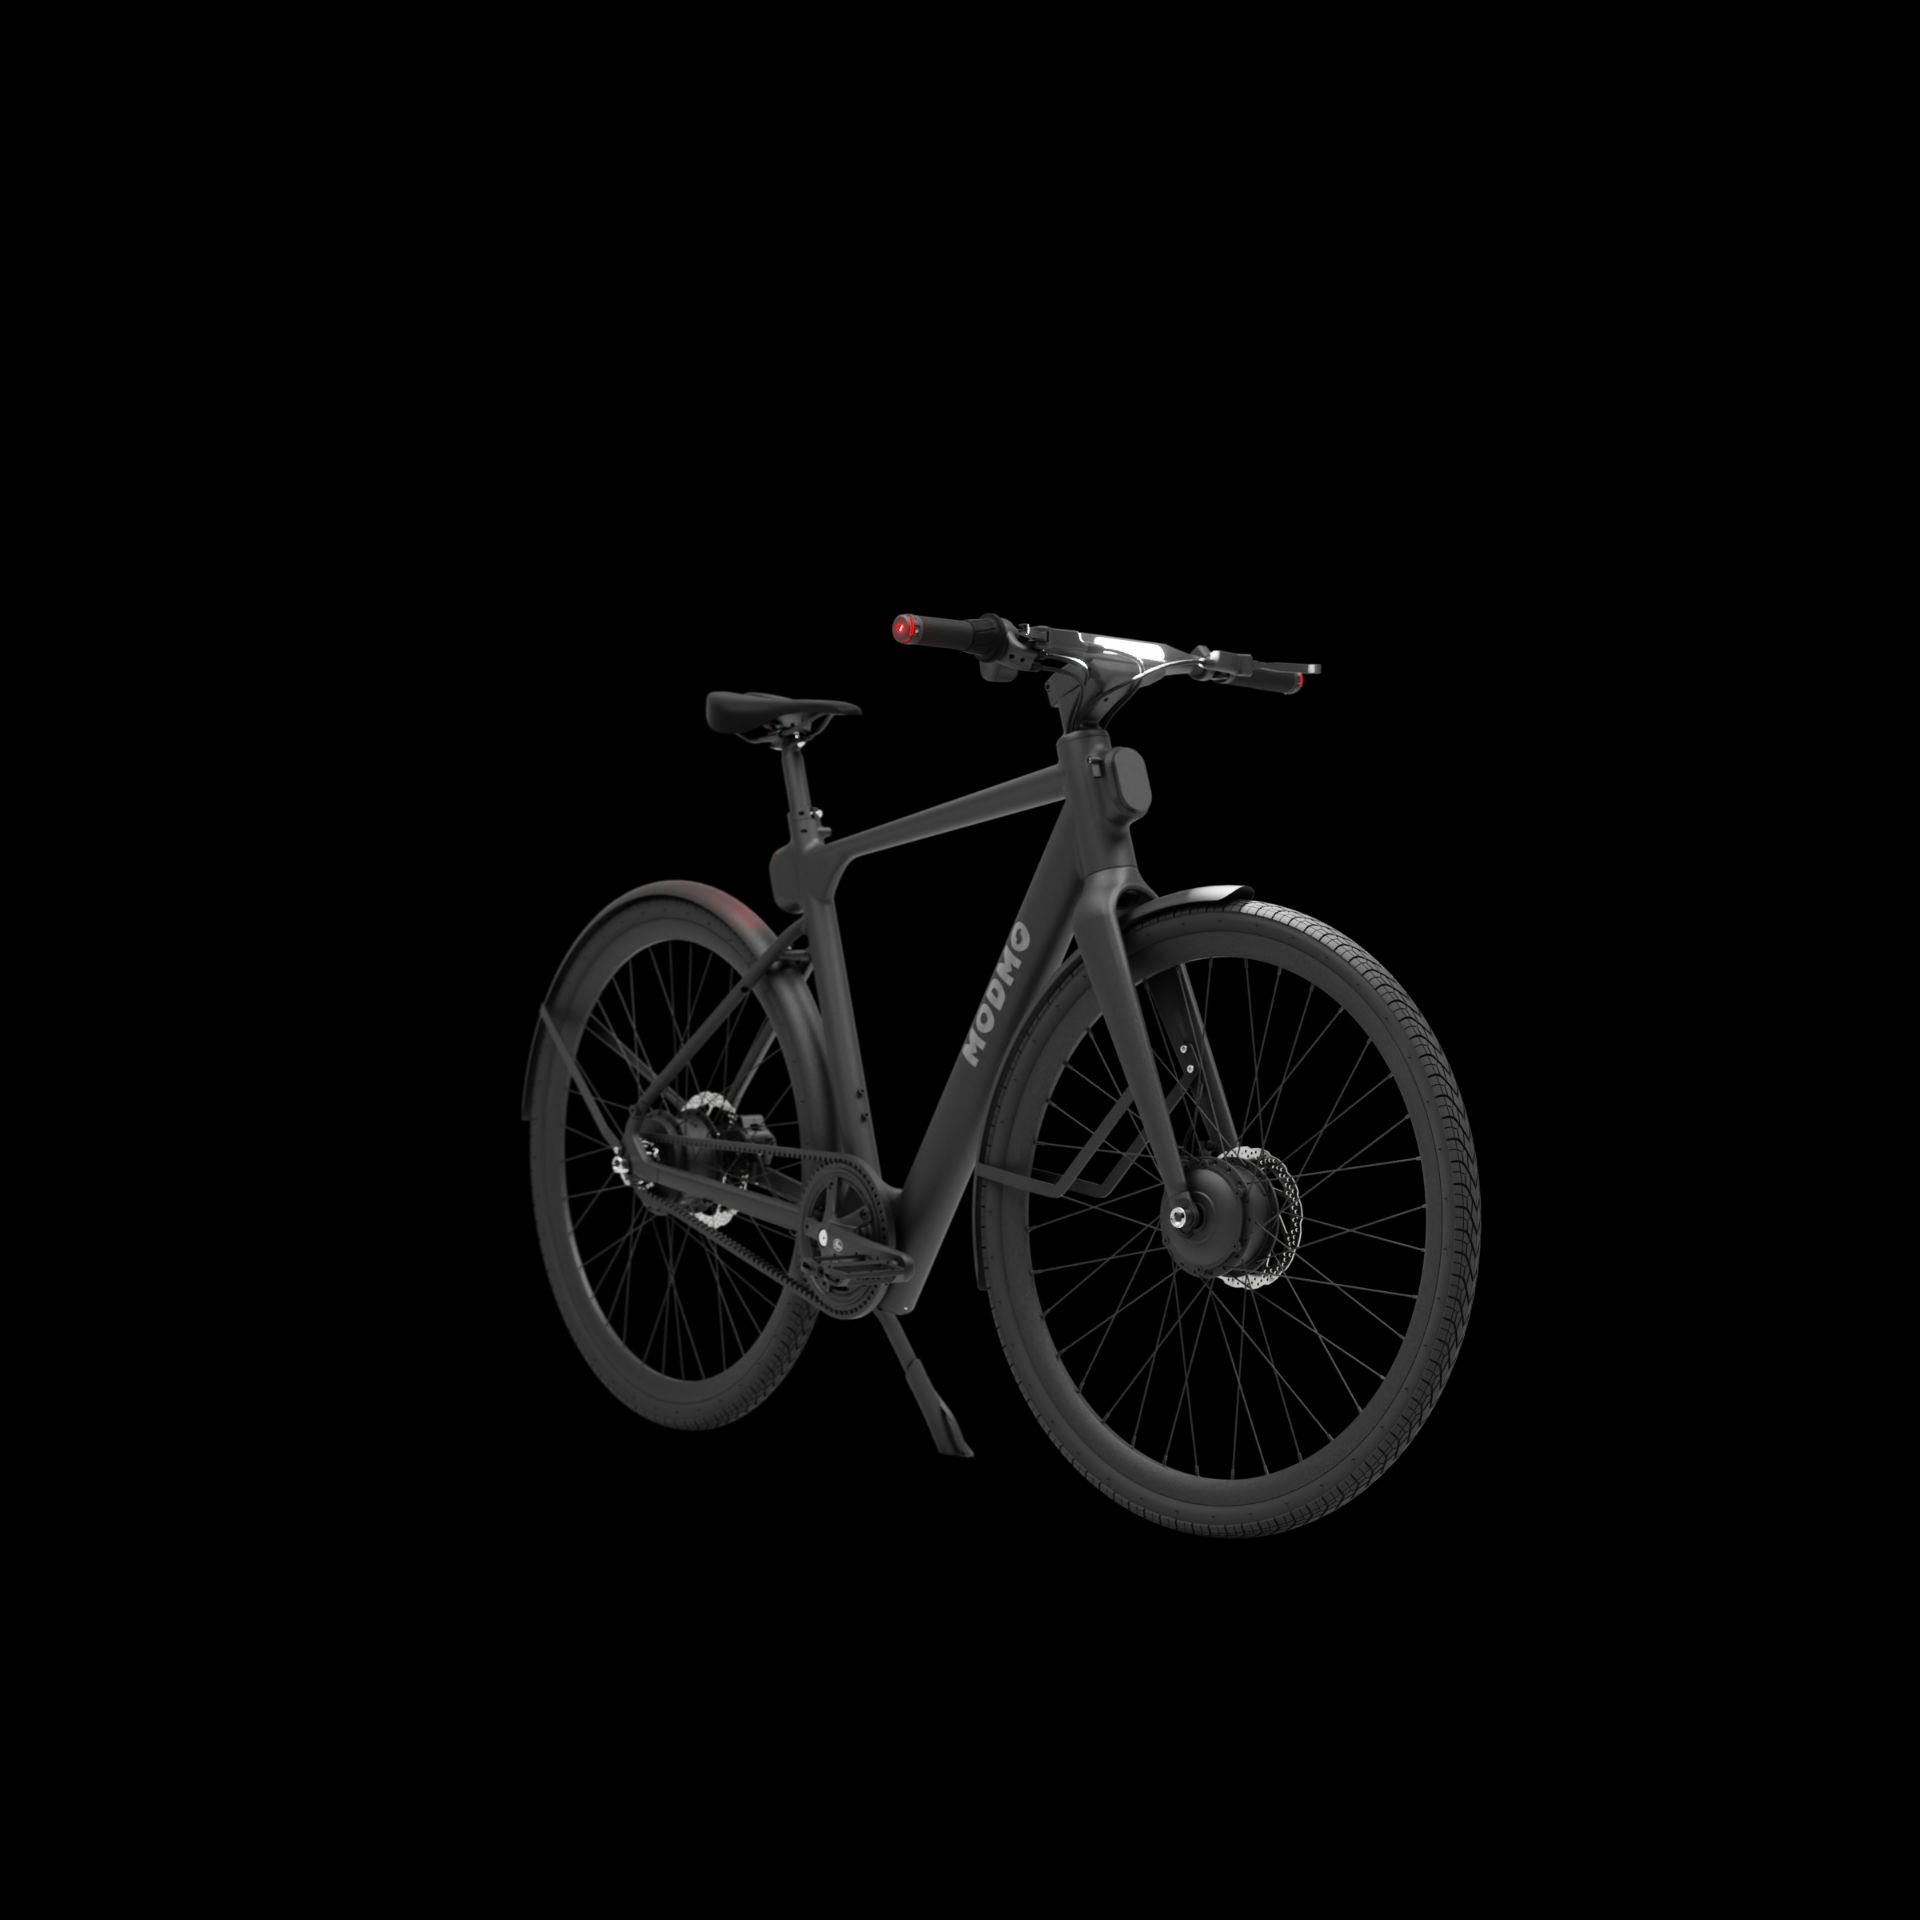 Modmo Saigon+ Electric Bicycle - RRP £2800 - Size L (Rider 175-190cm) - Image 15 of 21